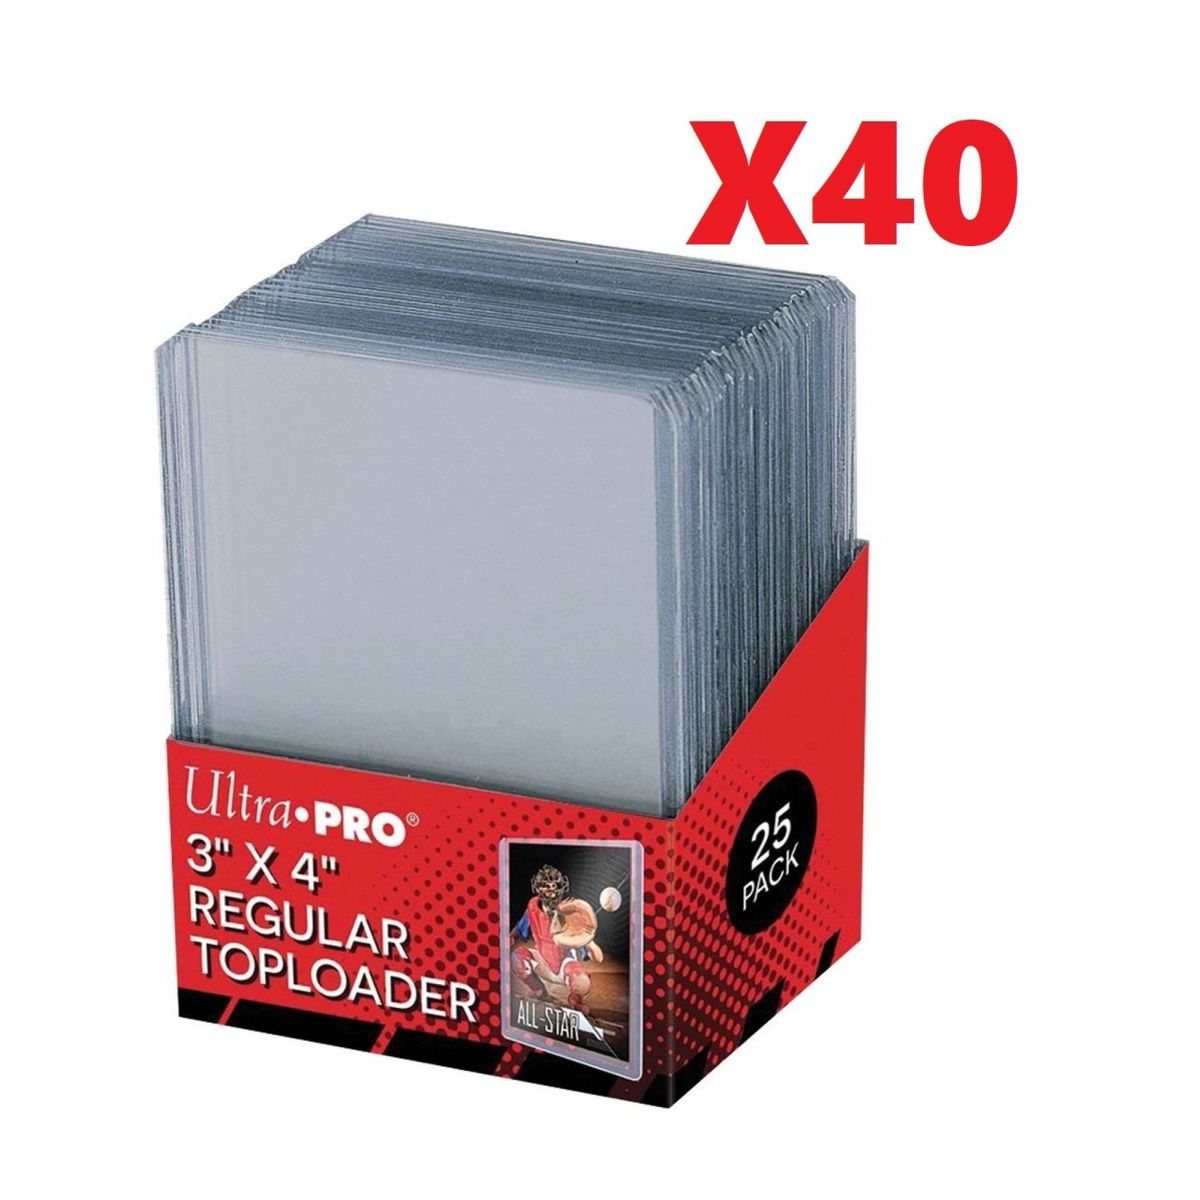 Ultra Pro - Pack - Rigid Card Sleeves - Top Loader (40)